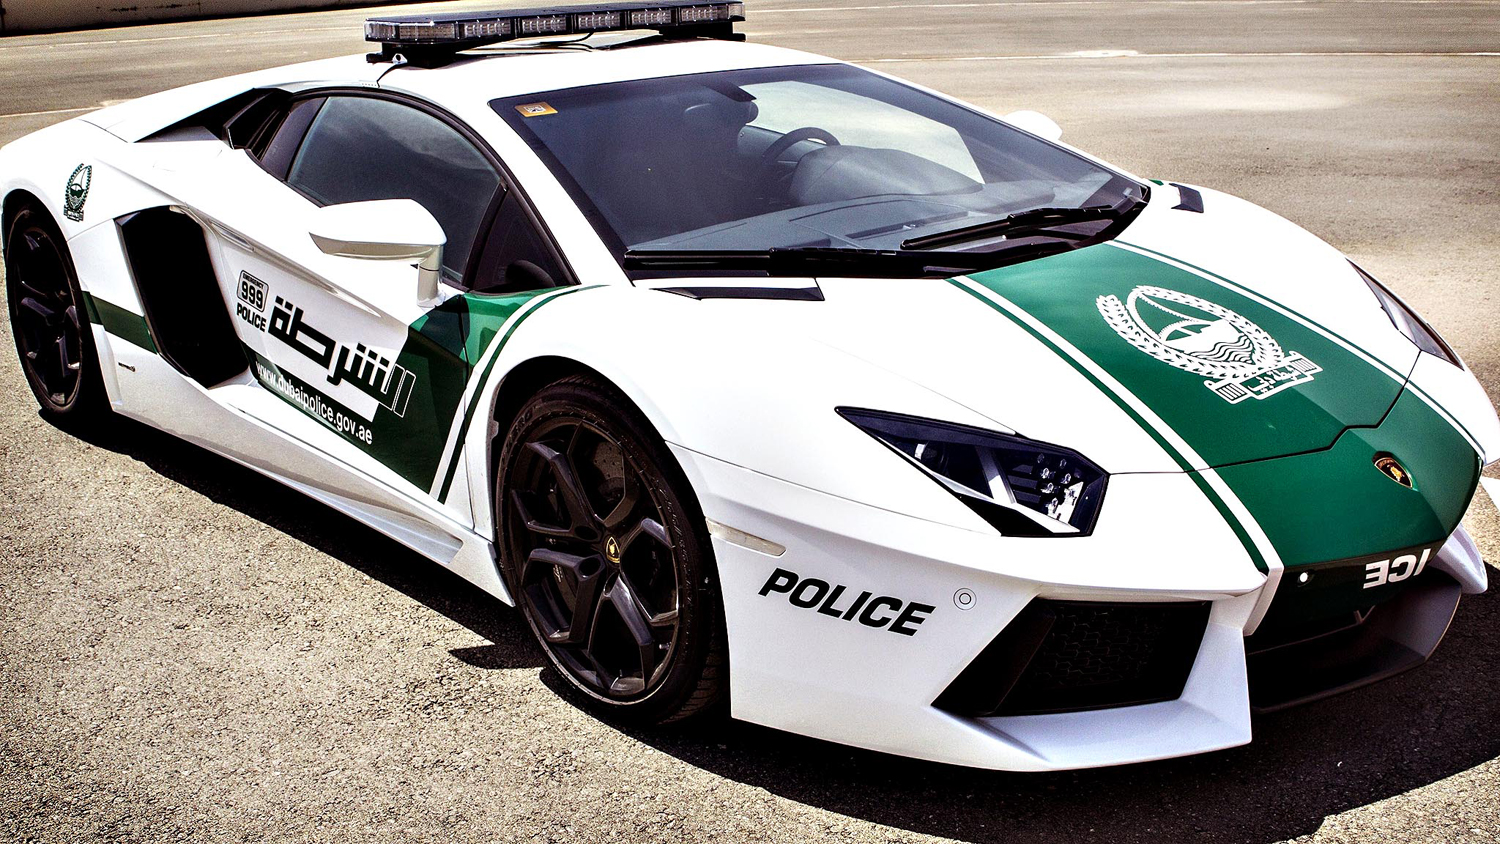 DUBAI POLICE CAR